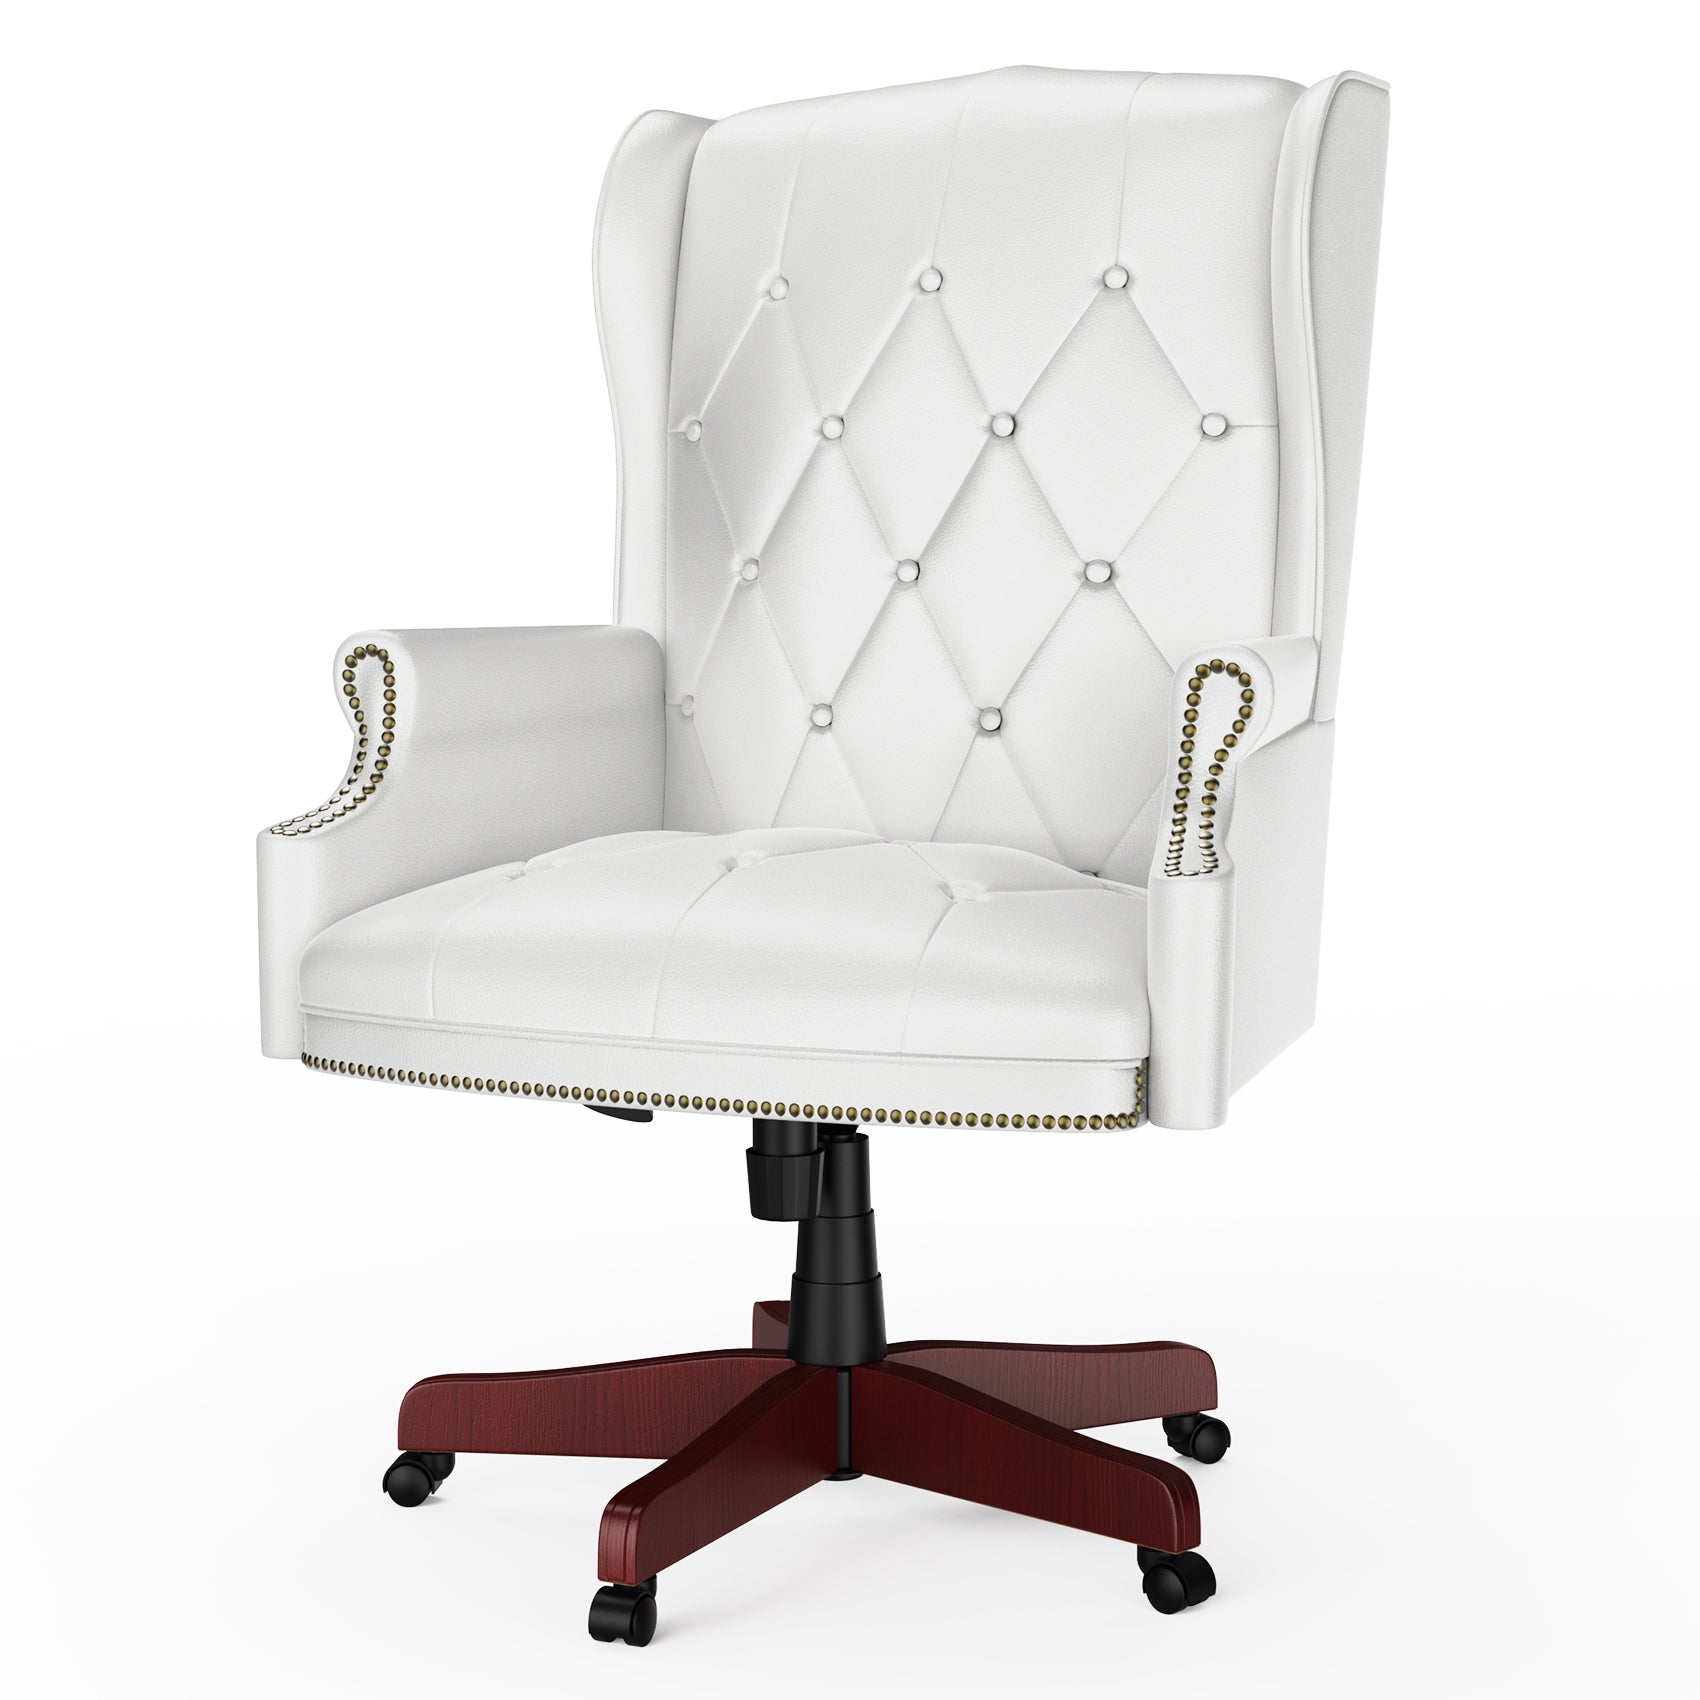 Executive Office Chair, Ergonomic Design High Back Reclining Comfortable Desk Chair - White